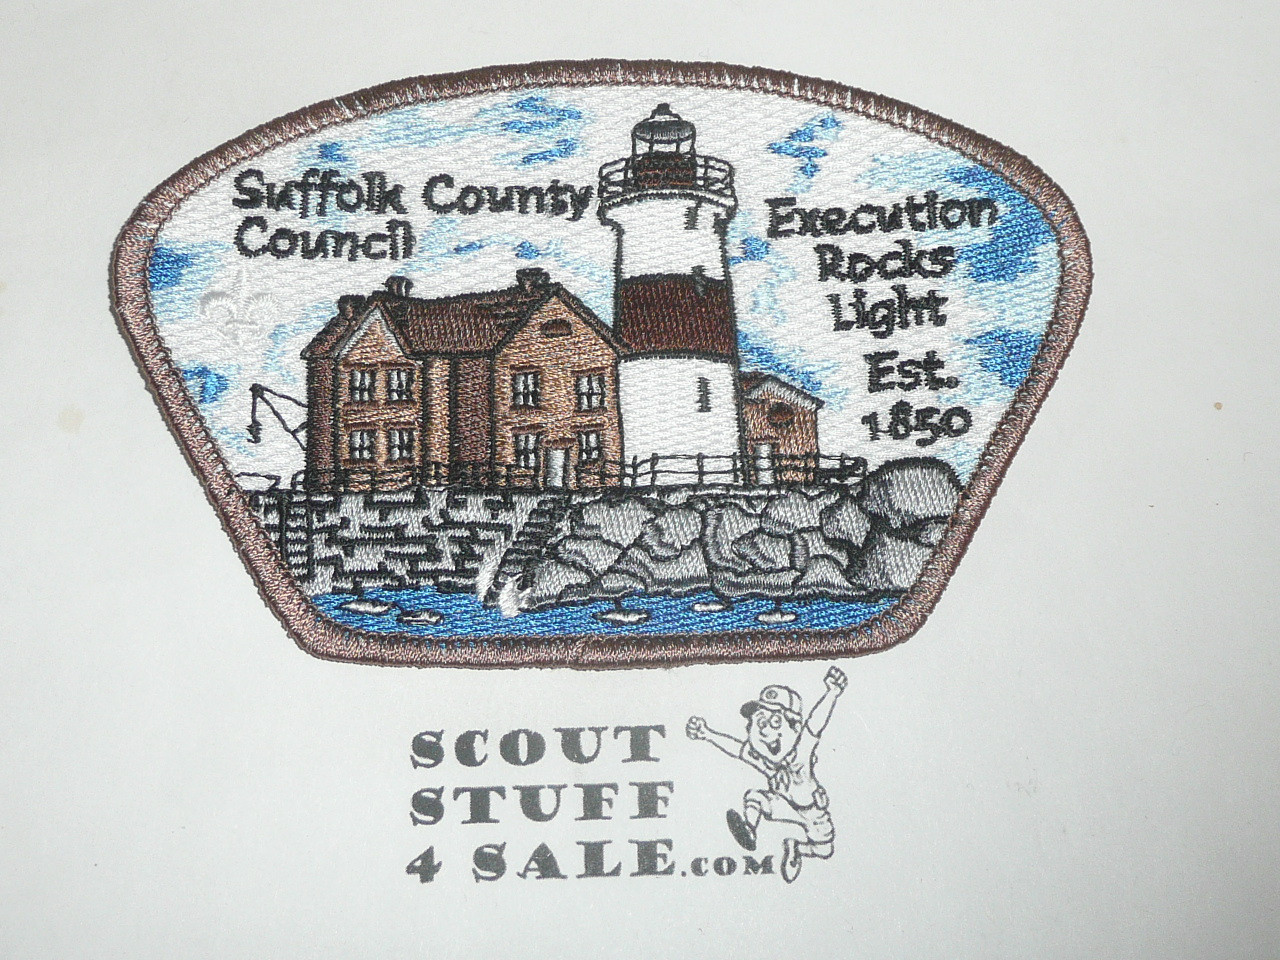 Suffolk County Council sa37 CSP, Execution Rocks Lighthouse - Scout